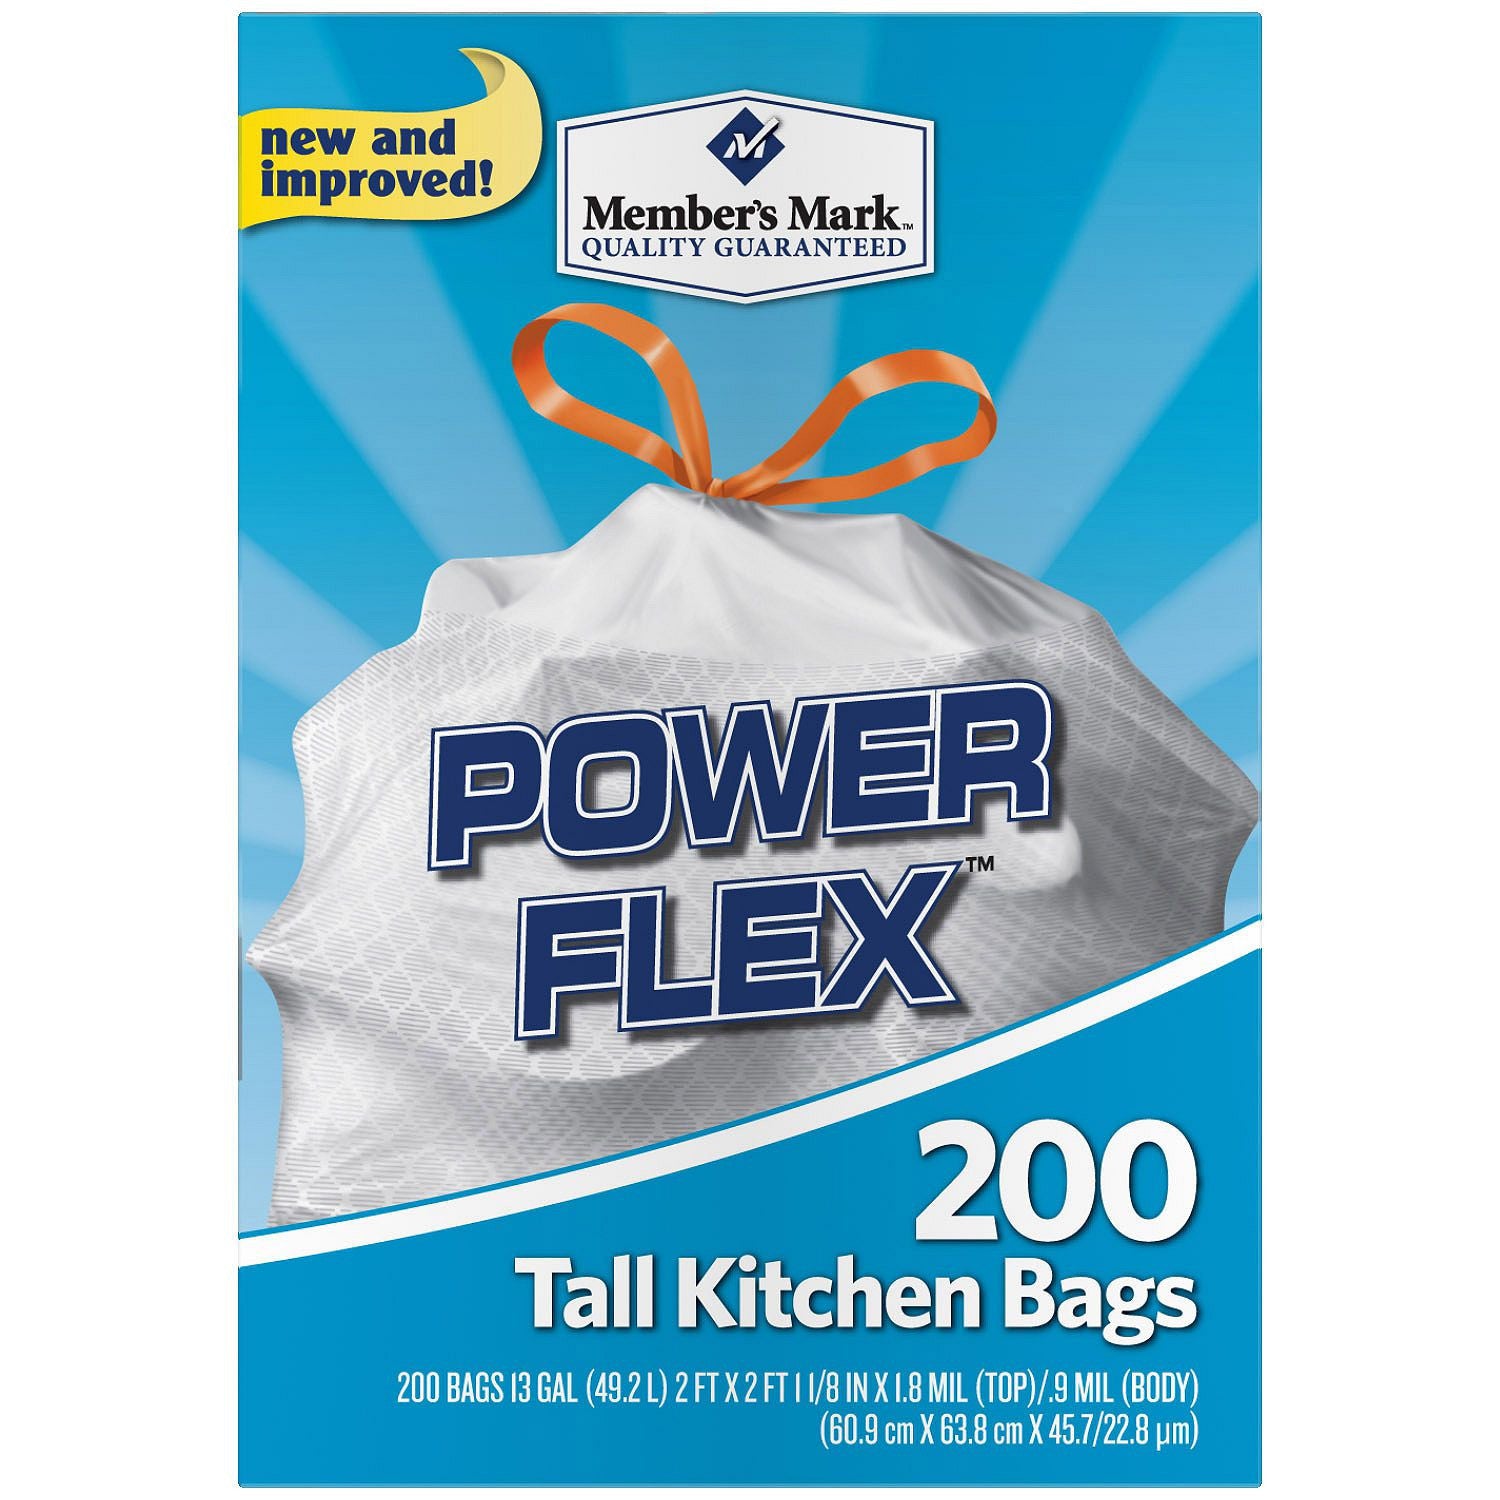 Member's Mark Power Flex Tall Kitchen Drawstring Bags, 200 Count